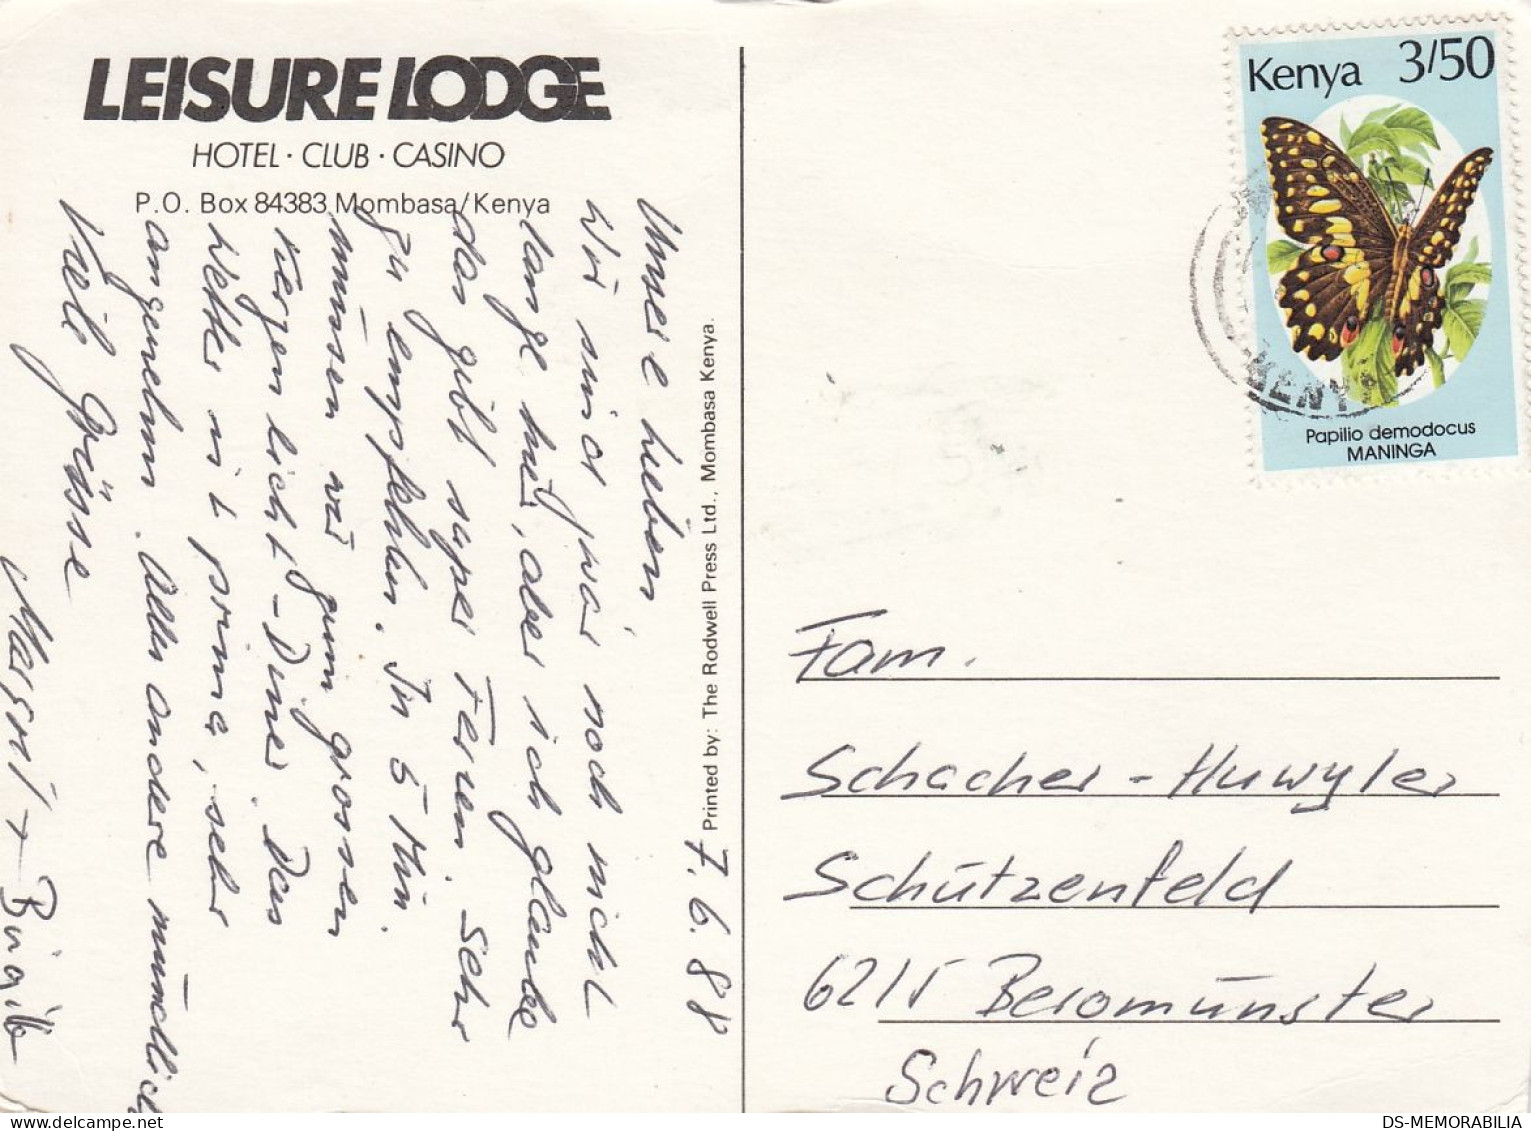 Kenya Mombasa Leisure Lodge Hotel 1988 Butterfly Stamp - Kenya